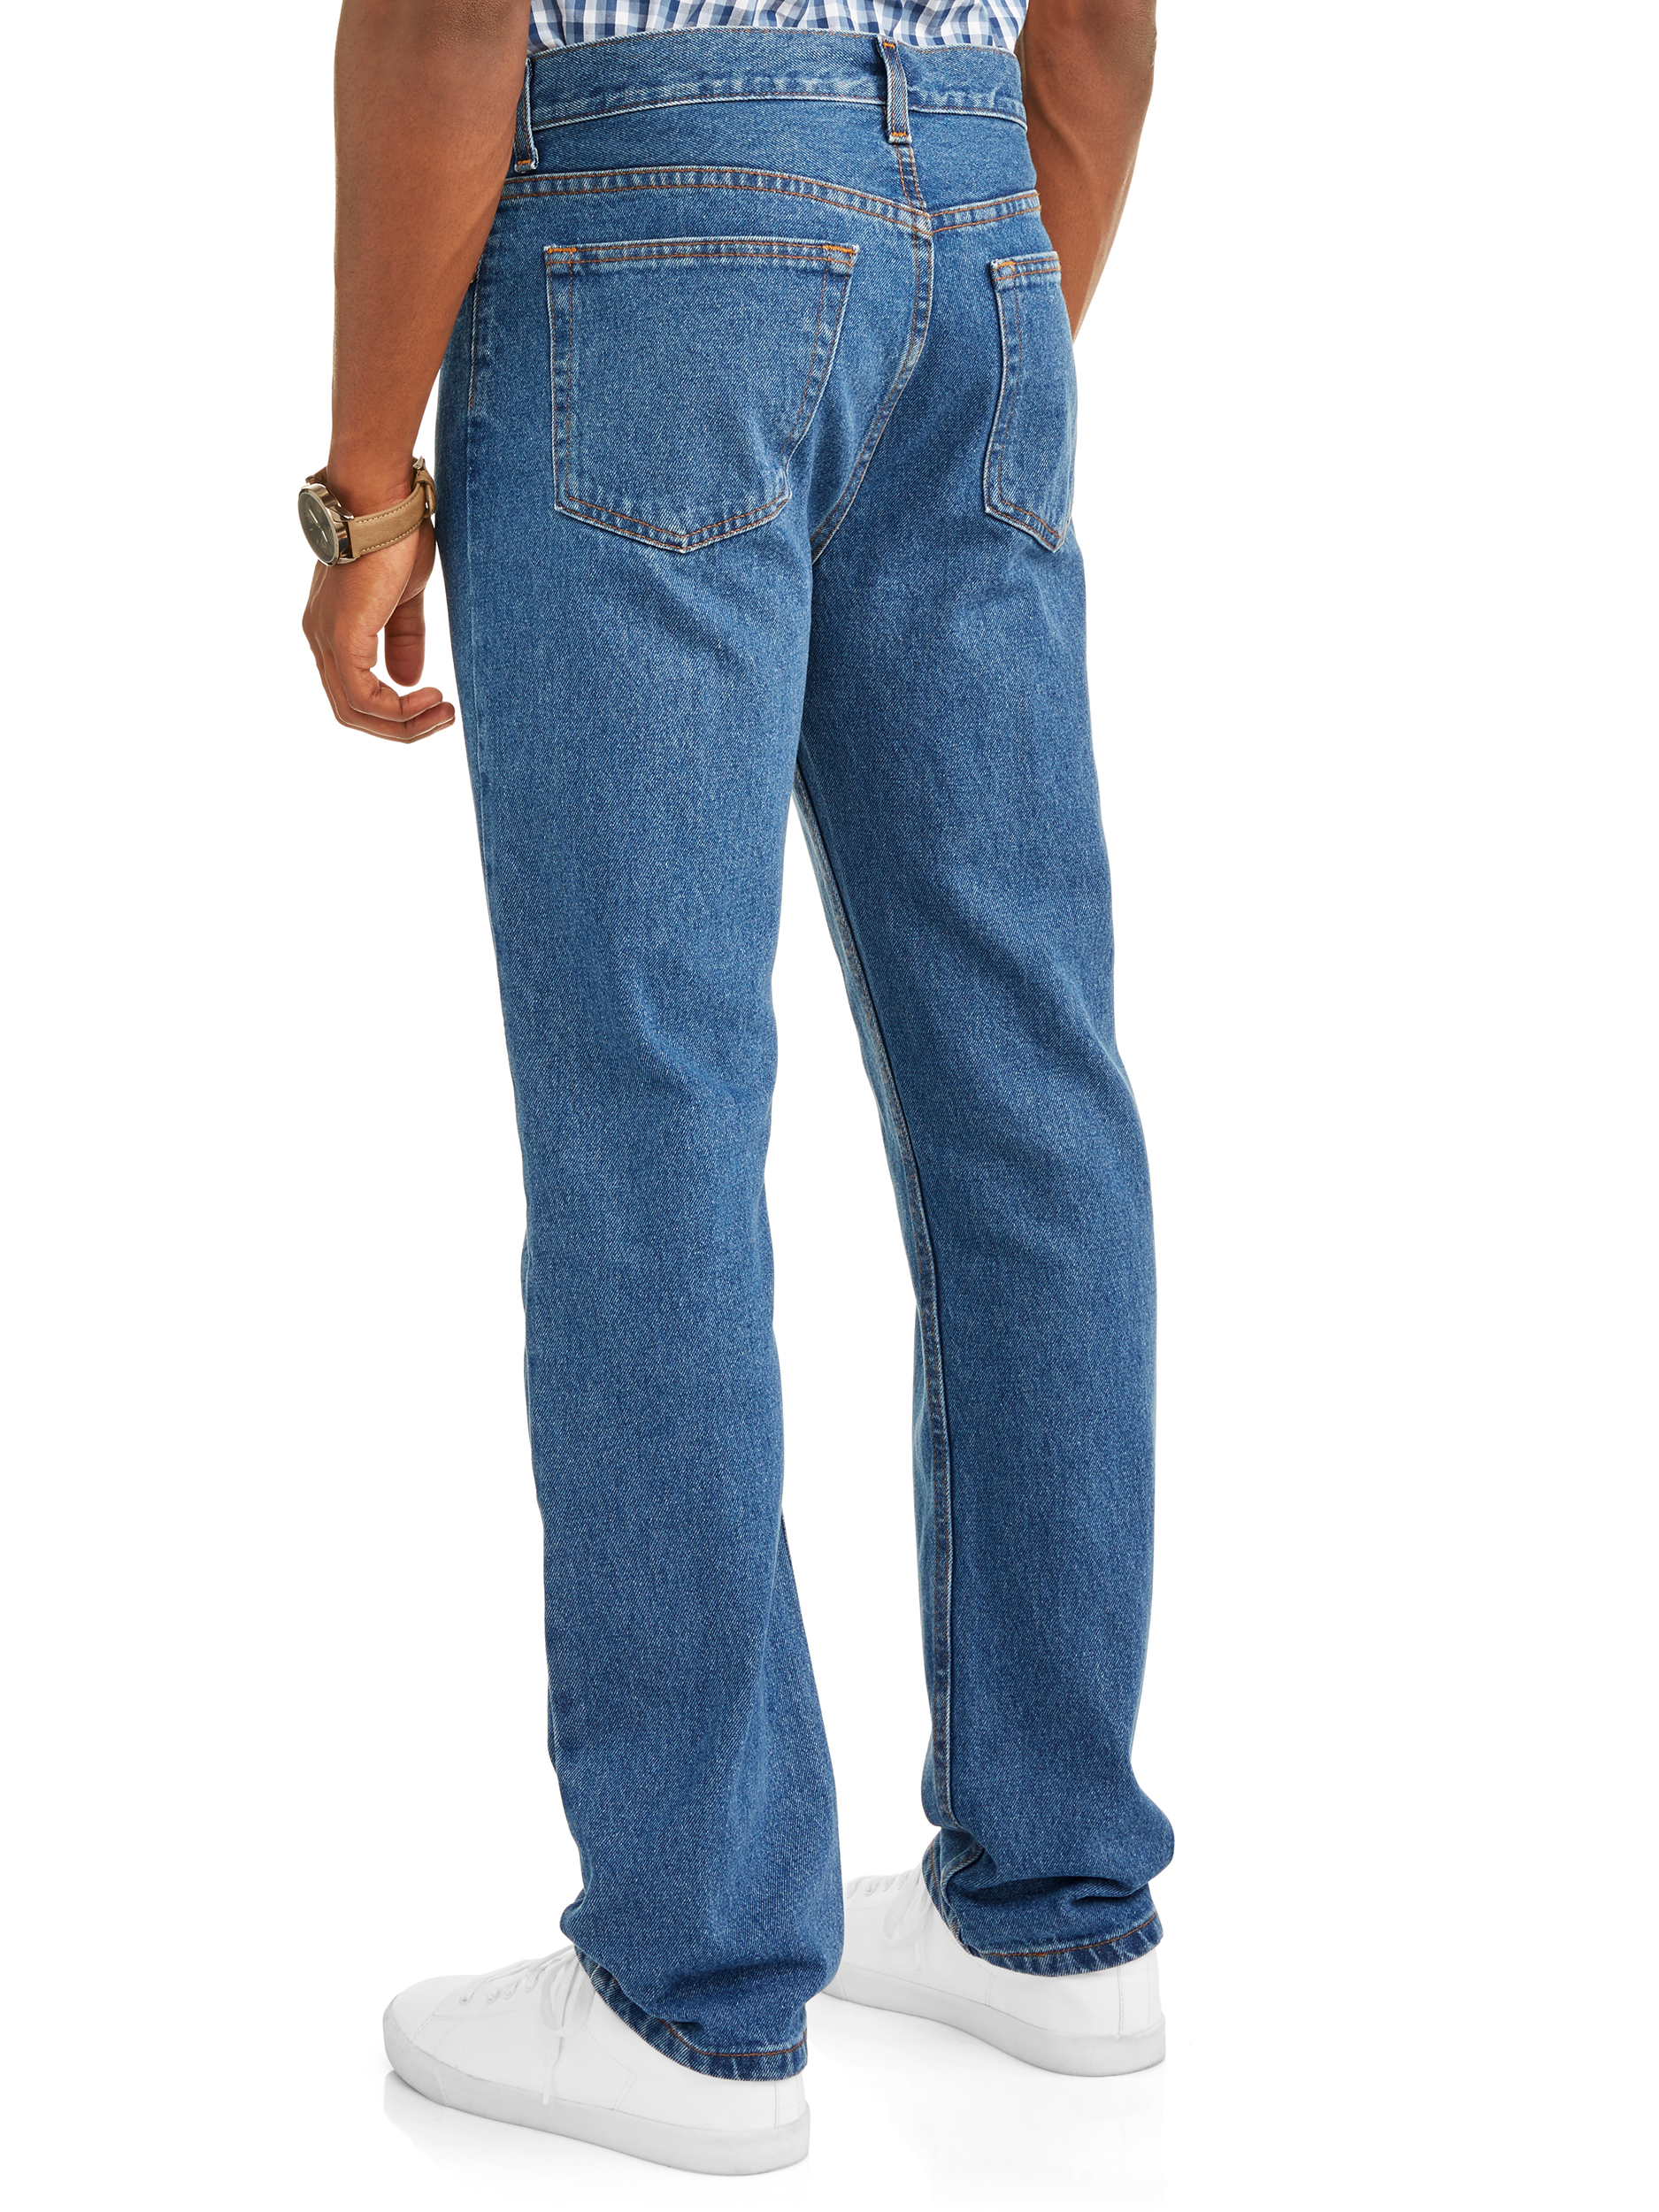 George Men's and Big Men's 100% Cotton Regular Fit Jeans - image 8 of 9